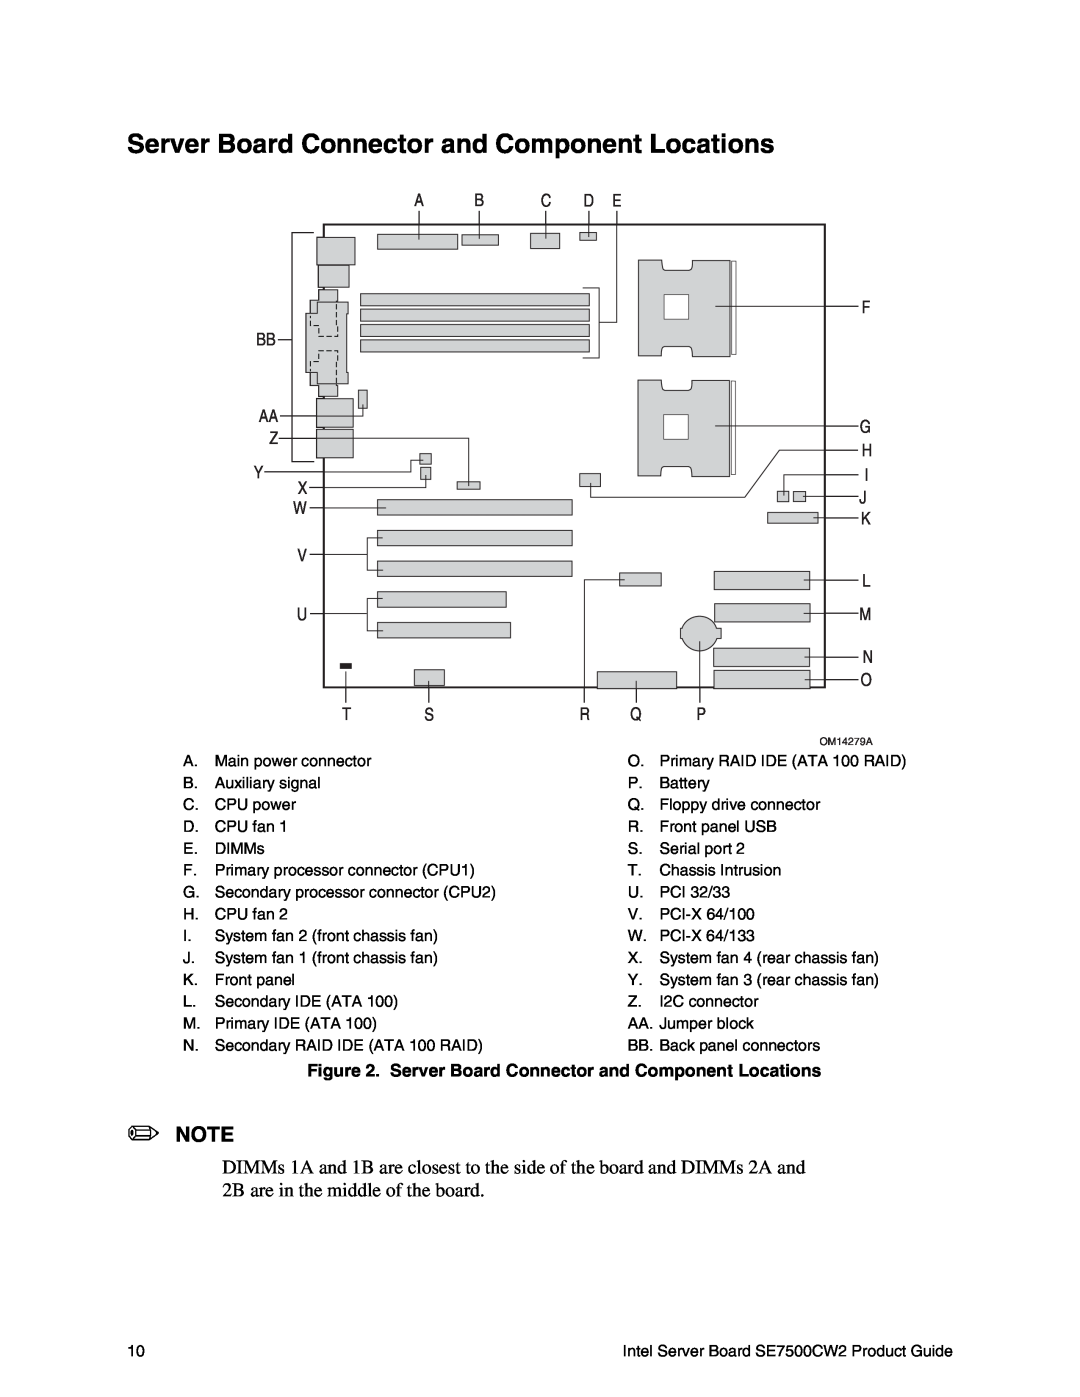 Intel SE7500CW2 Server Board Connector and Component Locations, A B C D E, Bb Aa Z Y X W V U Ts, F G H I J K L M N O R Q P 